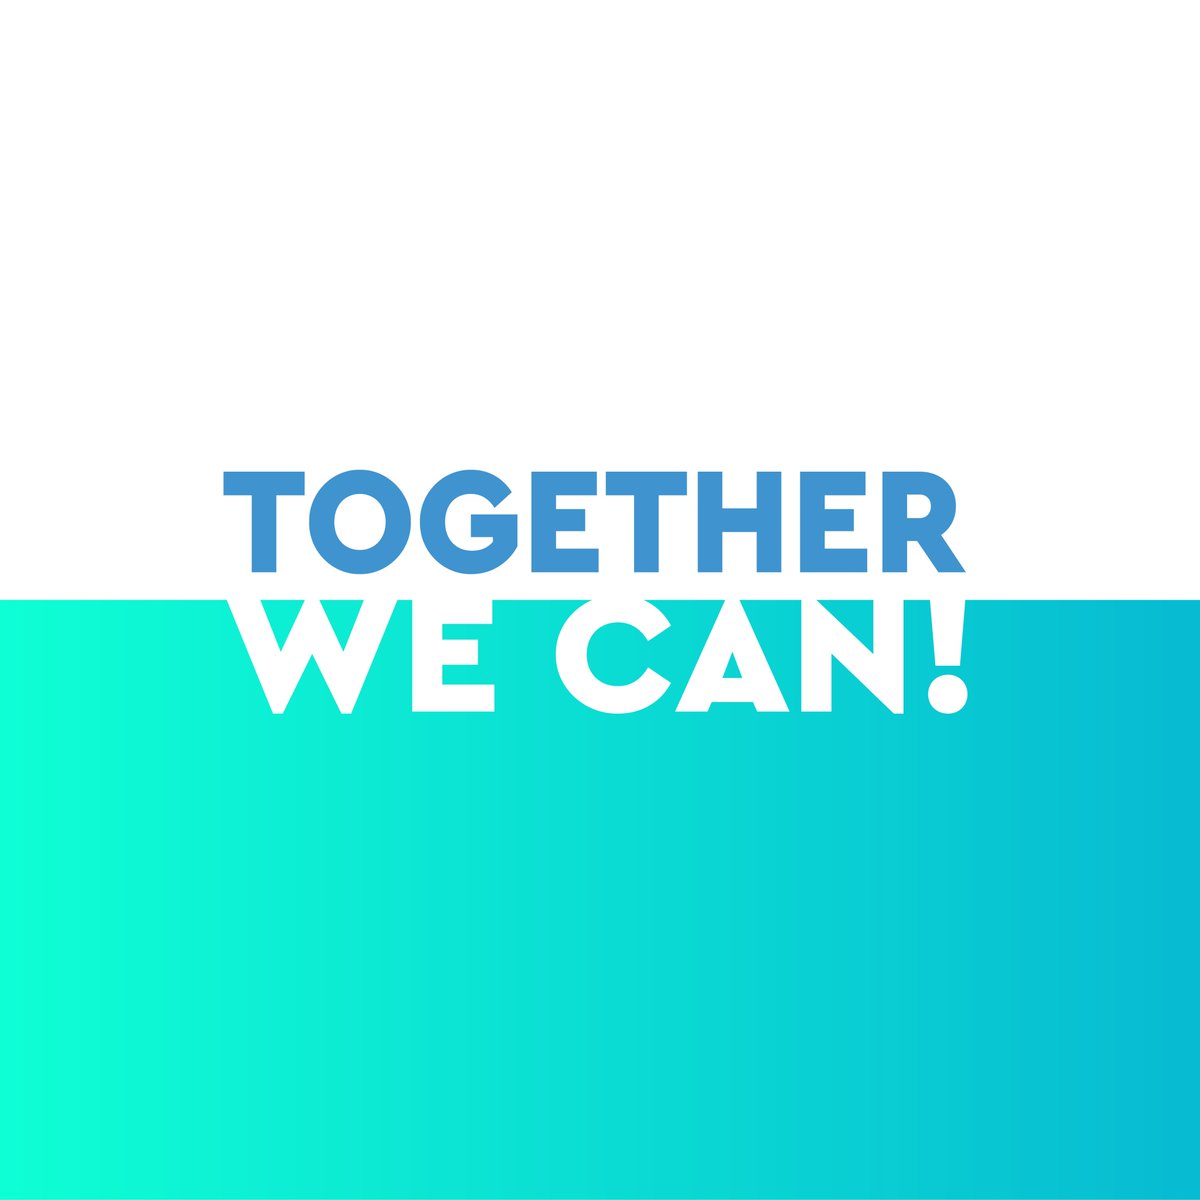 Together We Can!!🤝

#crackneet #medicalcolleges #BeAdoctor #BeSarvsrestha #medical #medicalinstitute #neetcoachingcenter #medicalstudents #medicalexampreparation #neetcoaching #medicalstudentlife #raipur #chhattisgarh #coachinginstitute #neet #neet2023 #neetaspirants